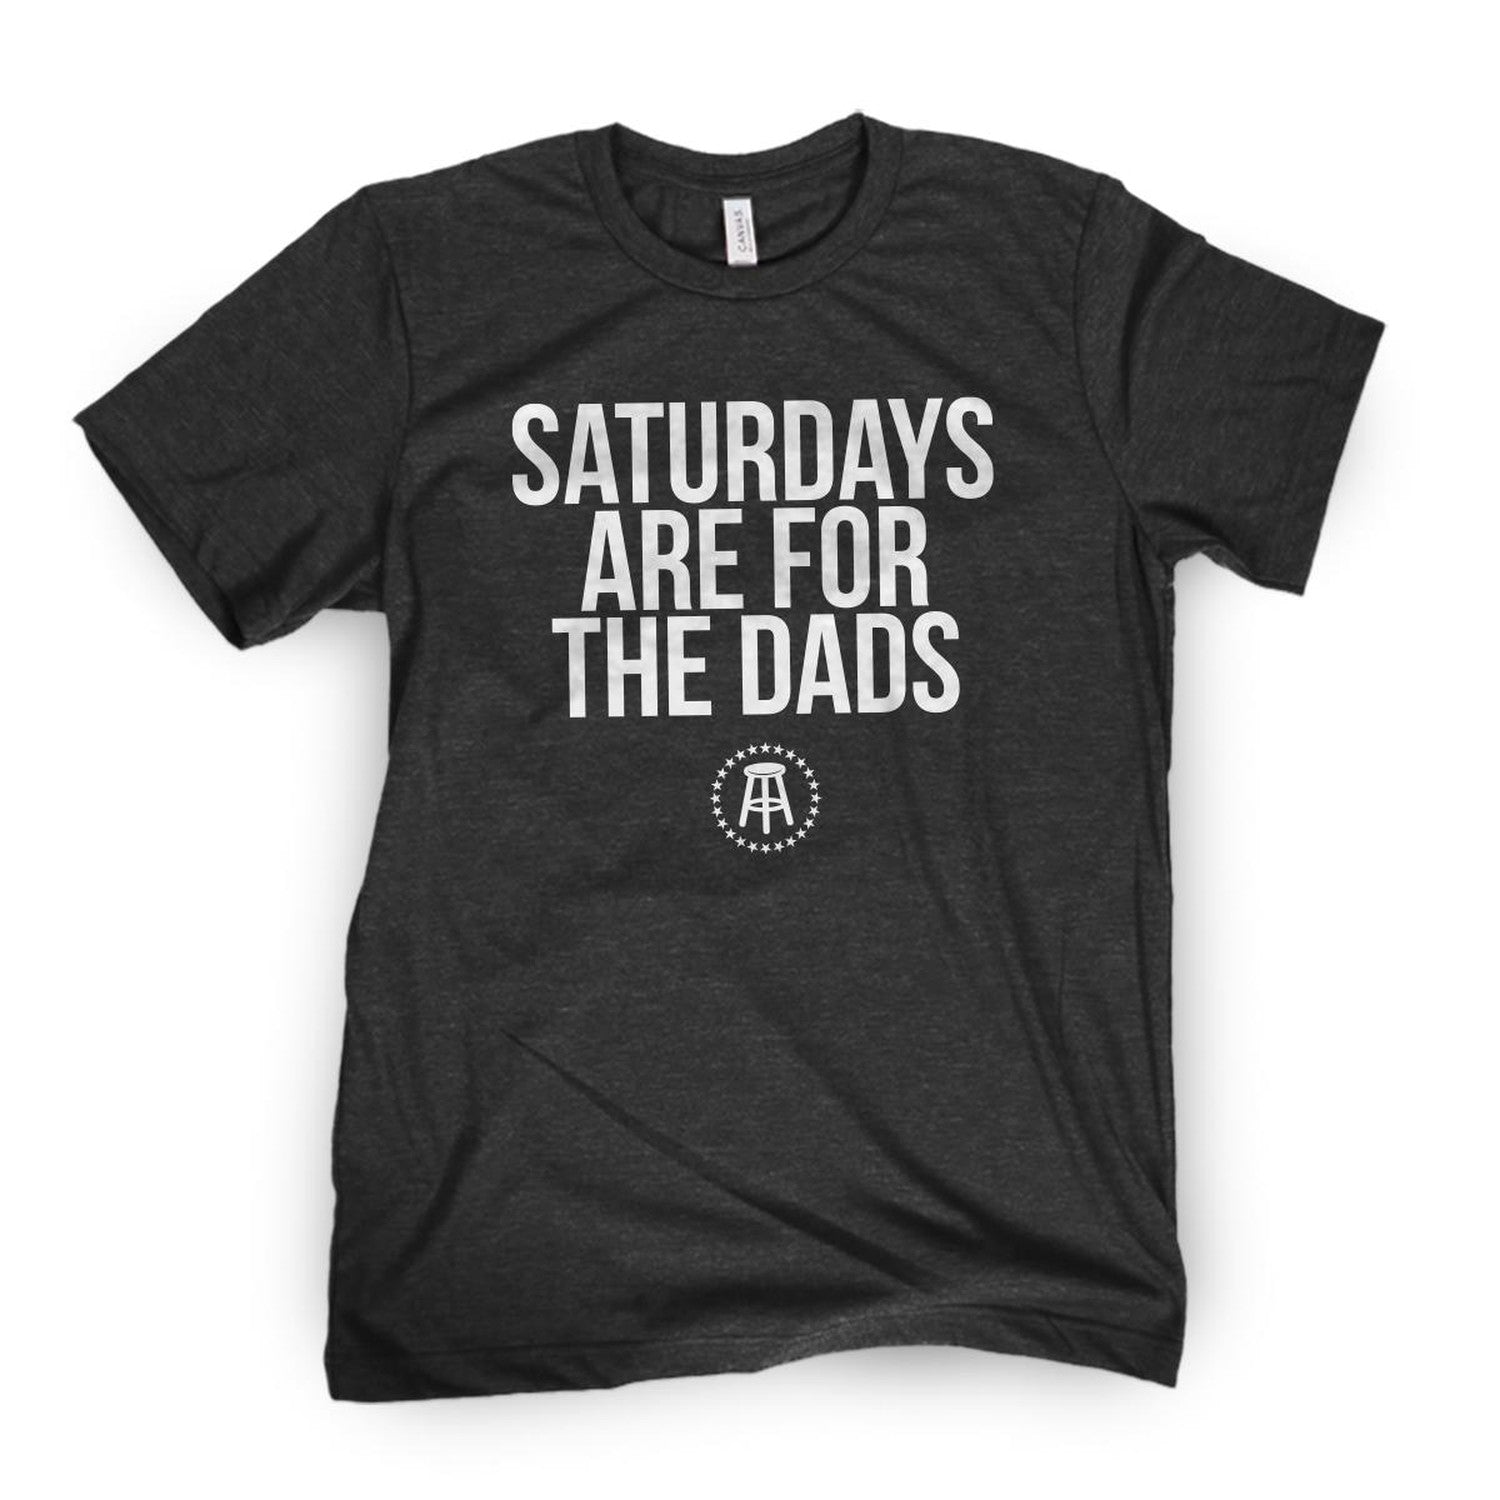 SAFTB Saturdays Are for The Dads II Tee | Barstool Sports Black